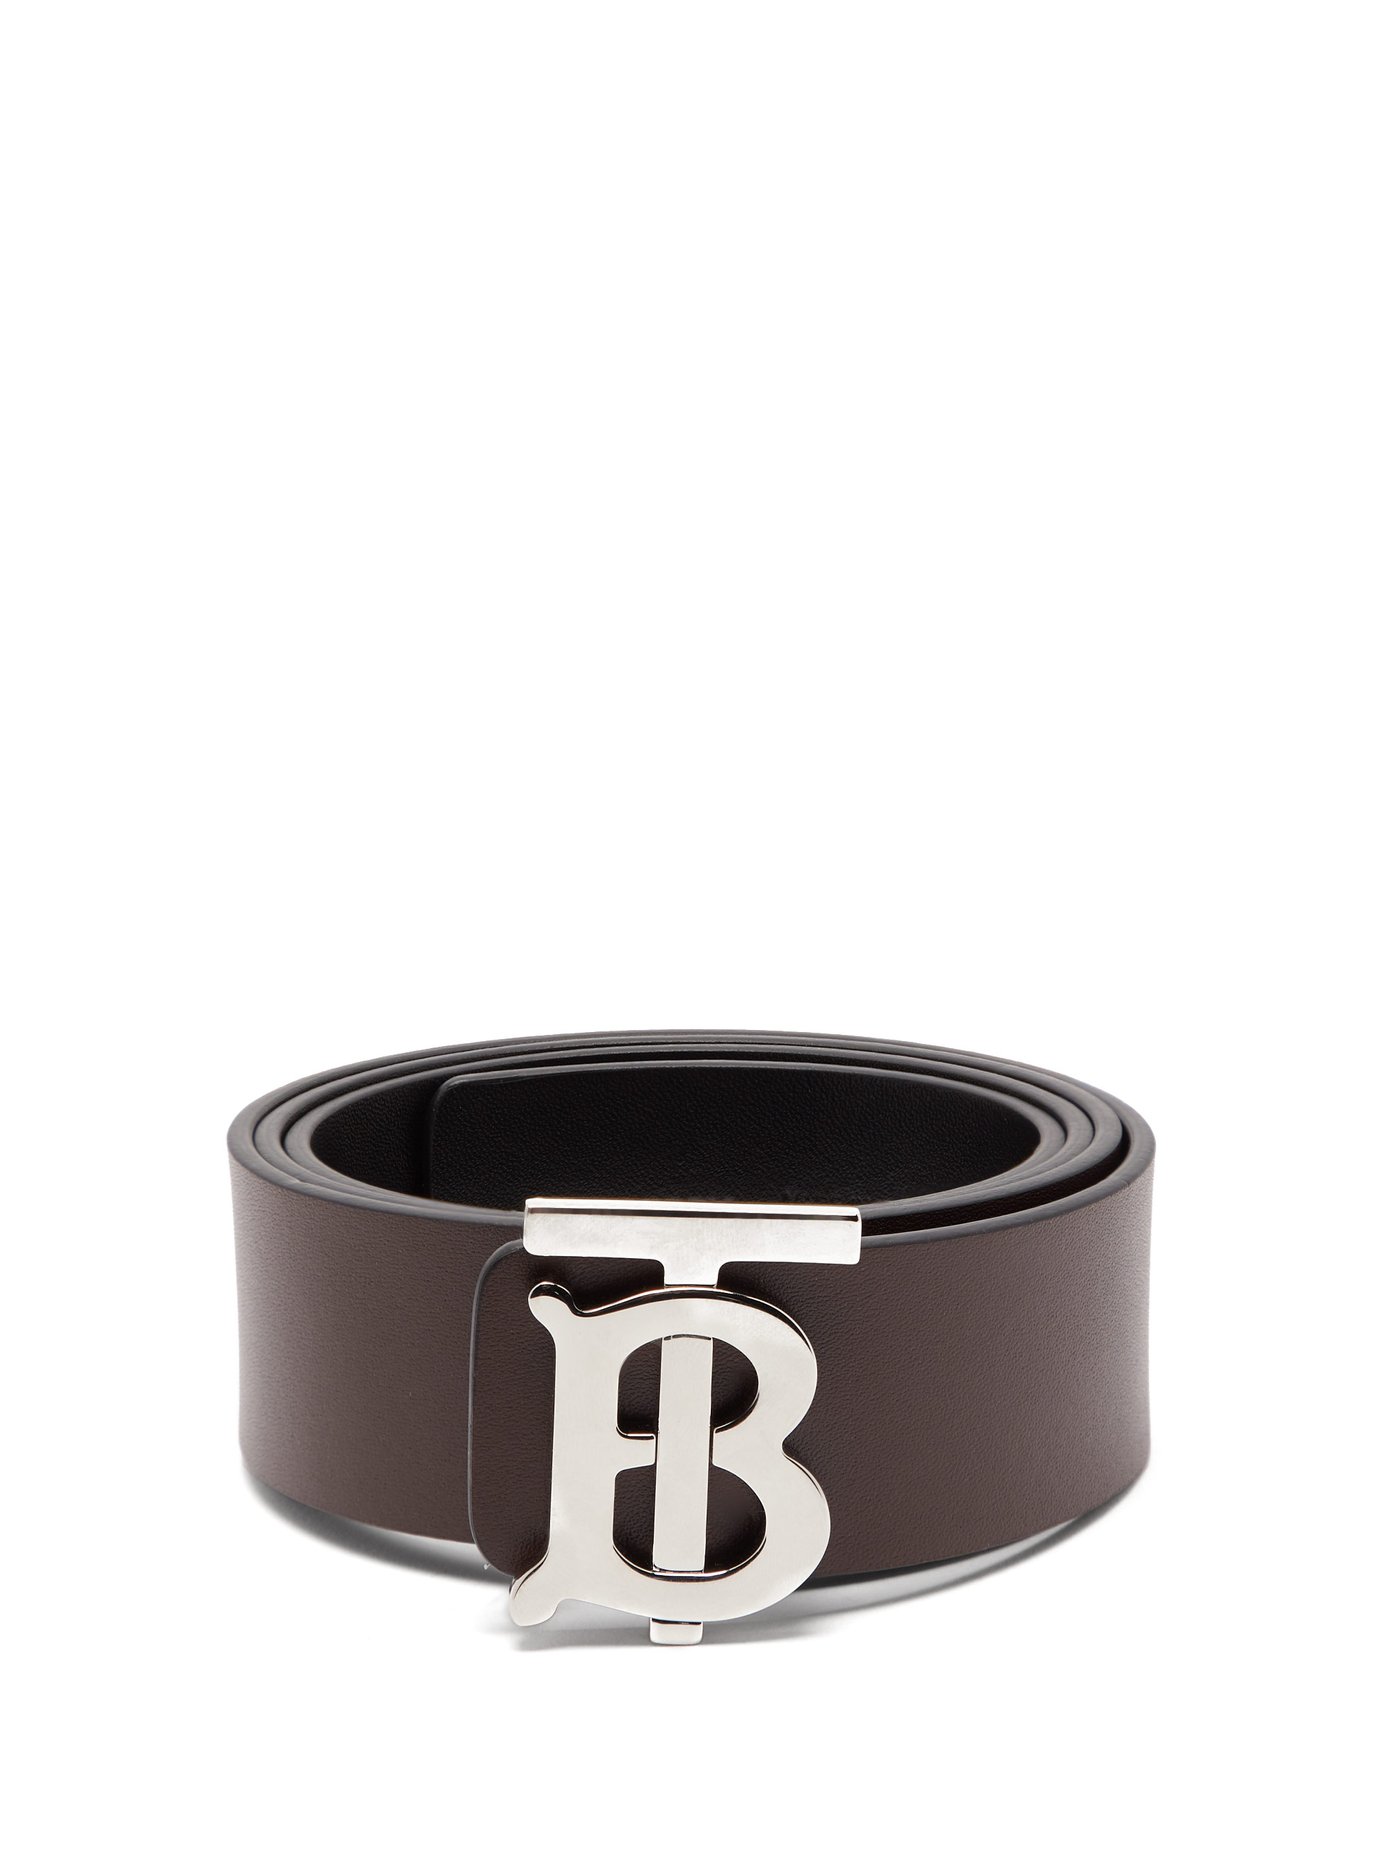 burberry tb belt